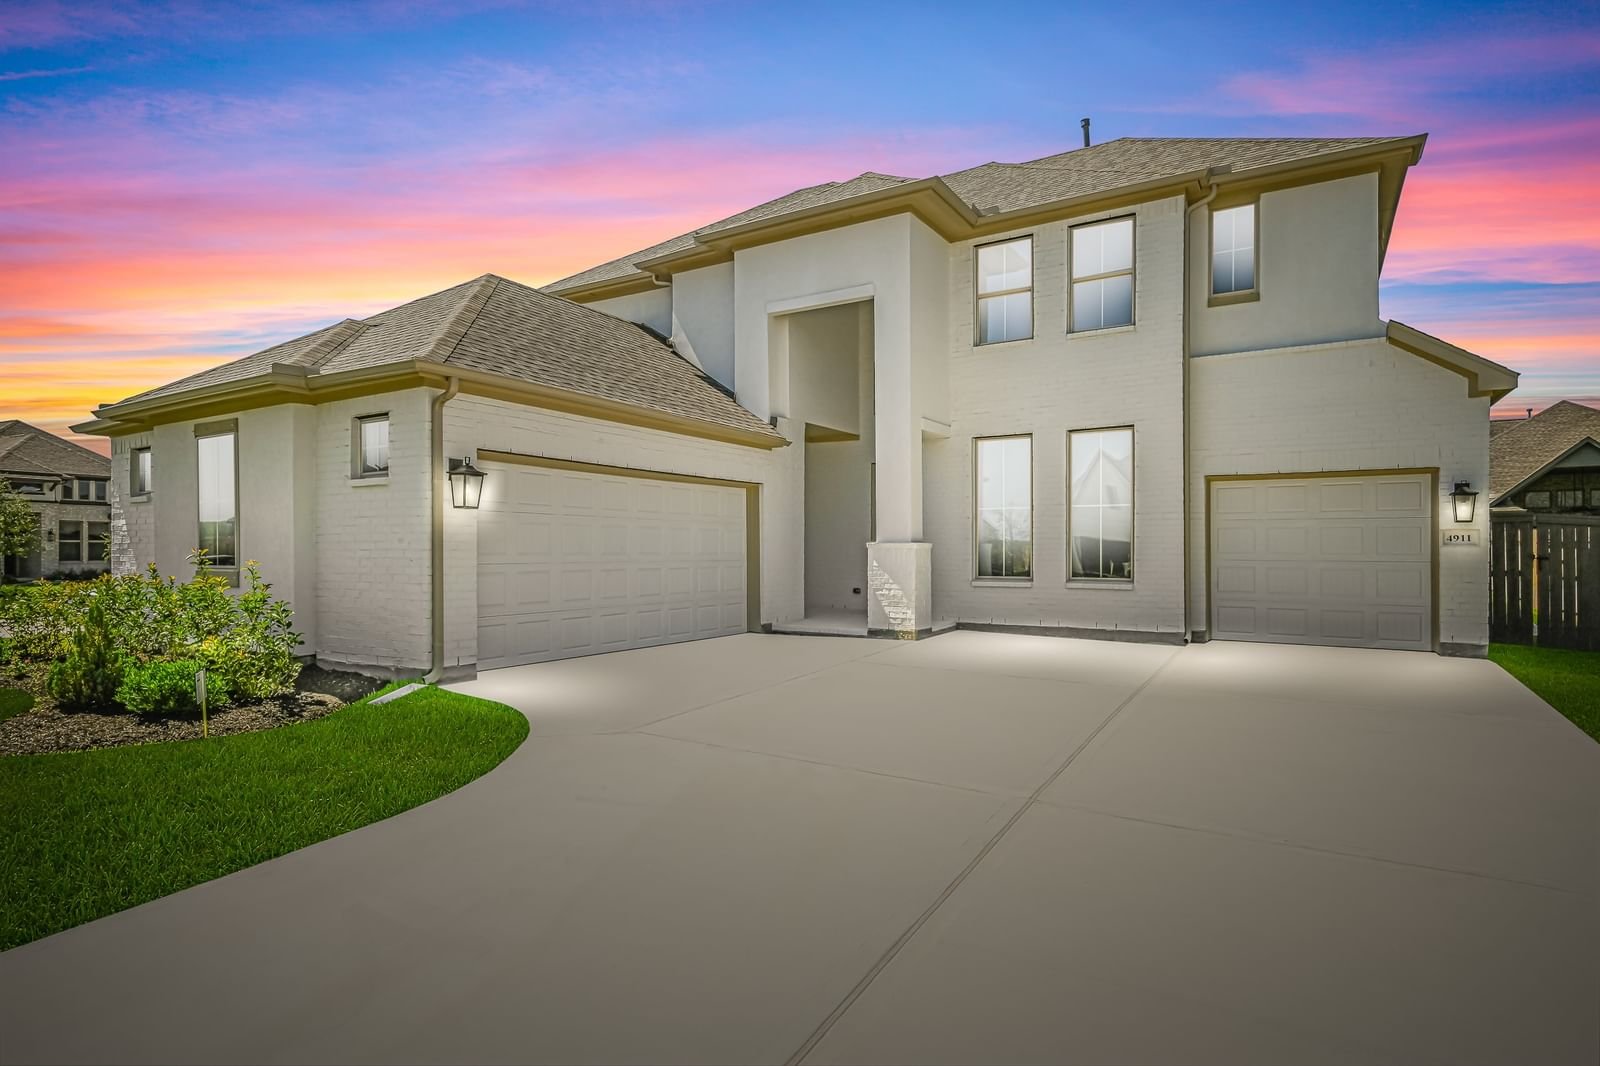 Real estate property located at 4911 Harbor Brooks, Galveston, League City, TX, US